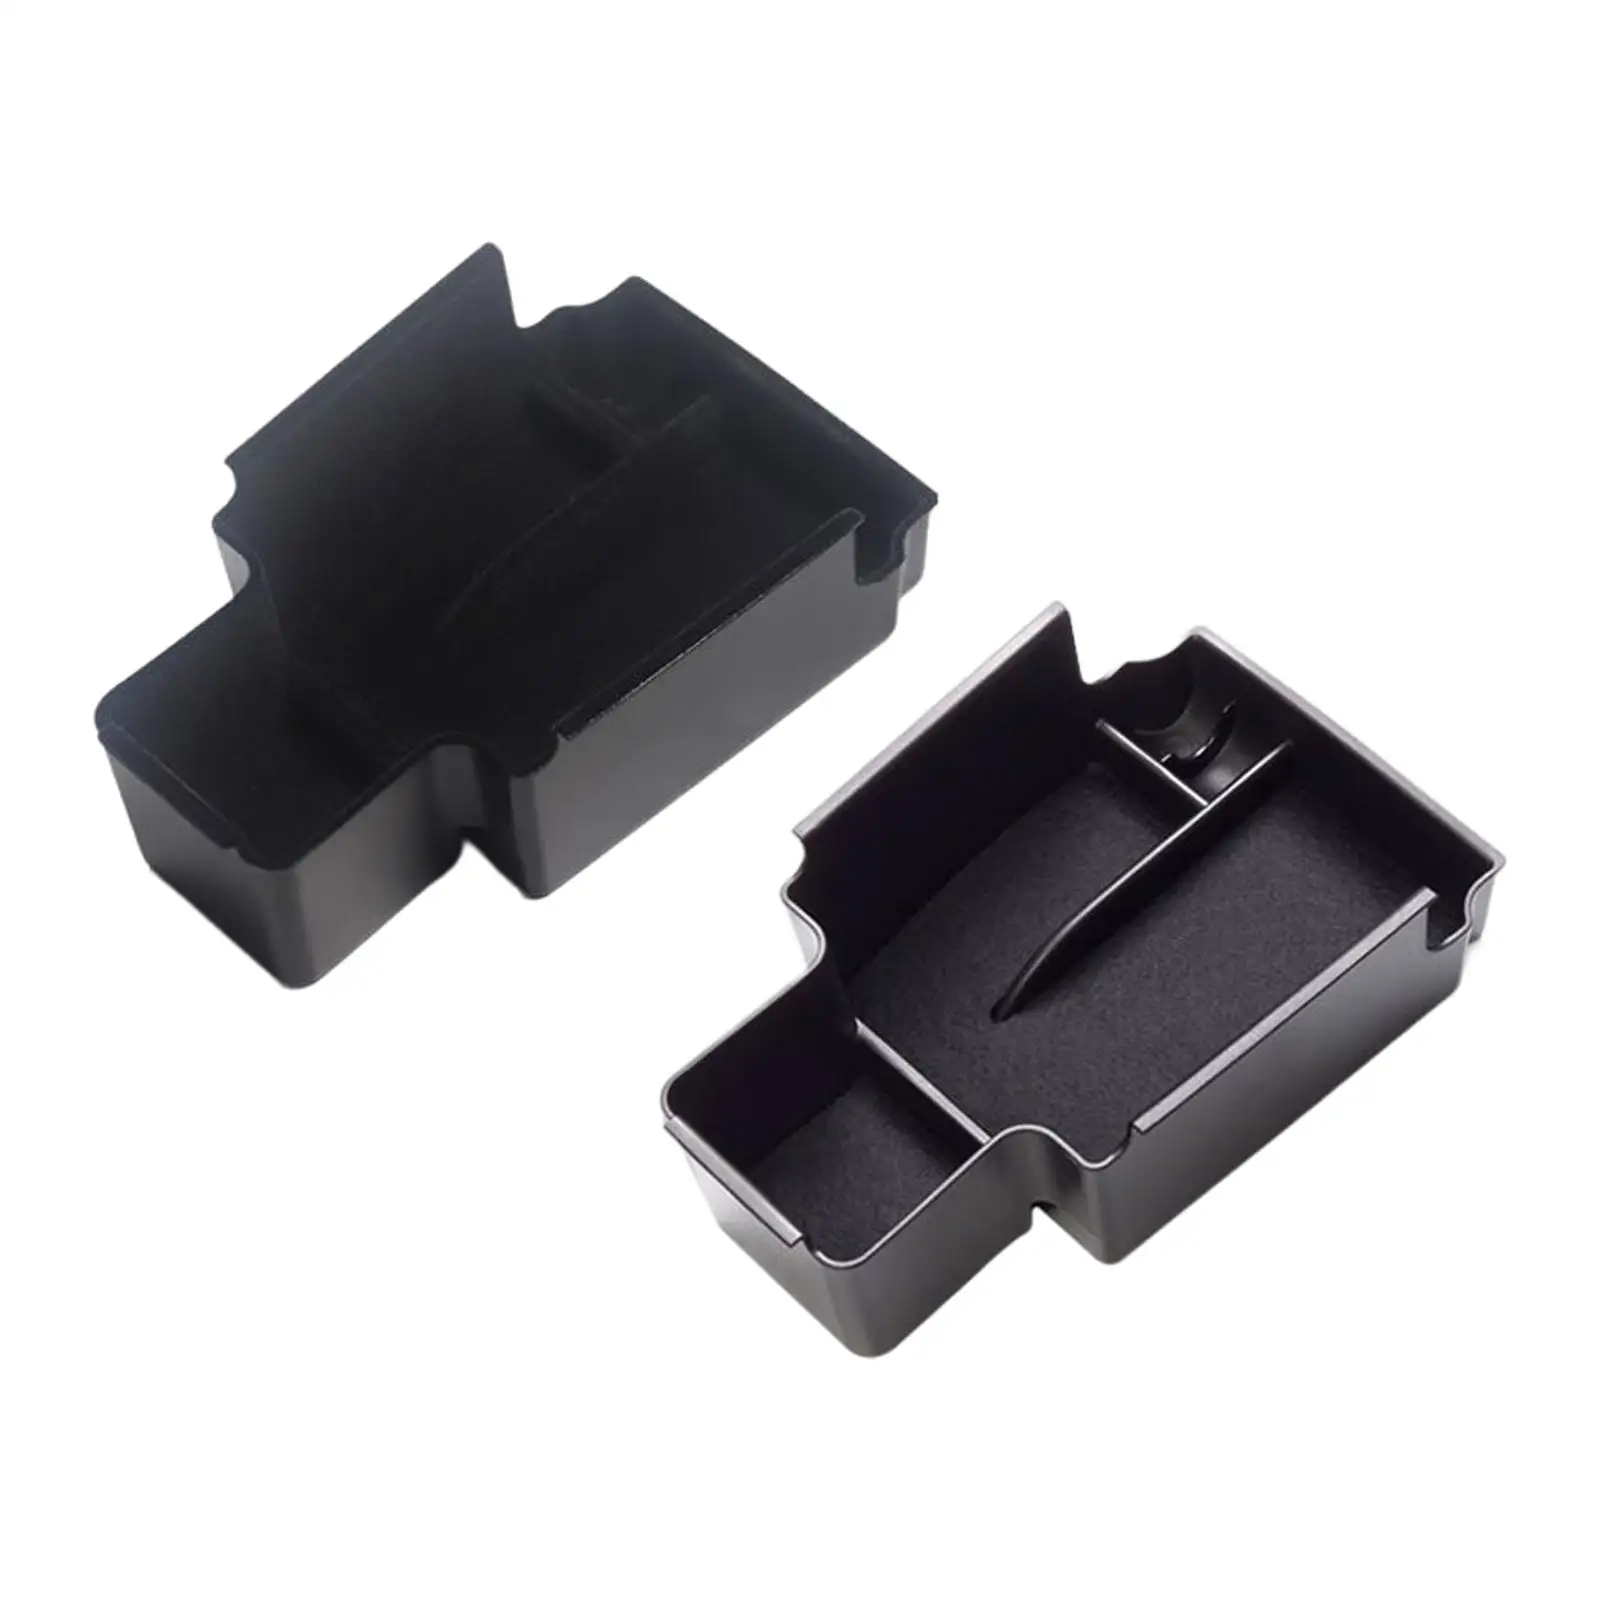 Automotive Center Console Armrest Storage Box Black Organizer Insert Tray for Ora Gwm Good Cat Durable Replace Parts